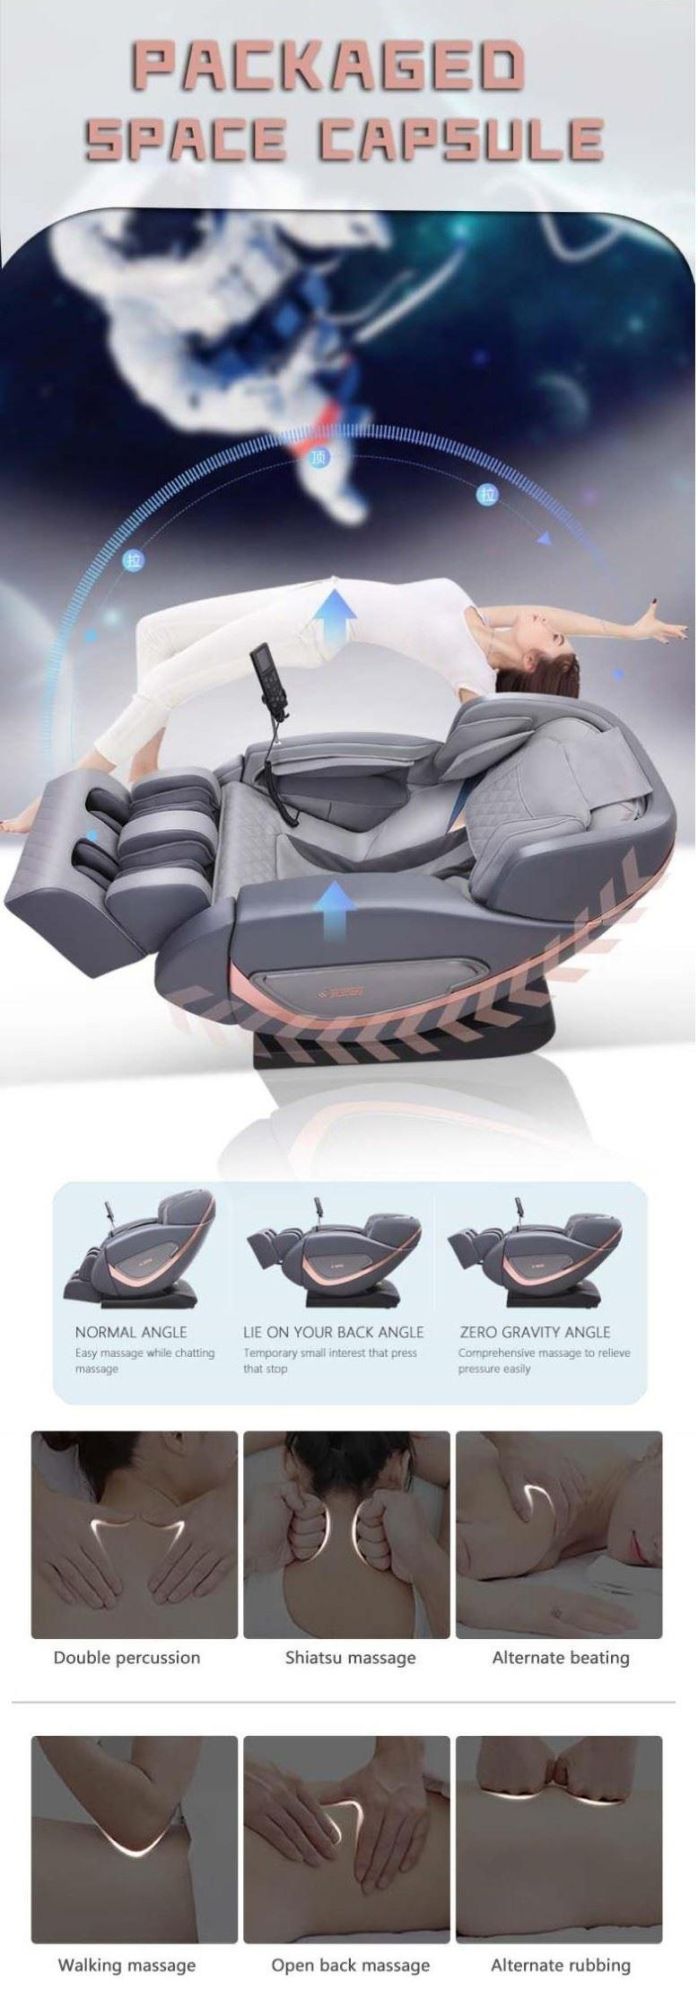 2021 New Hot Sale SL Track Zero Gravity 3D Massage Chair for Japan Korea Vietnam Philippine Market